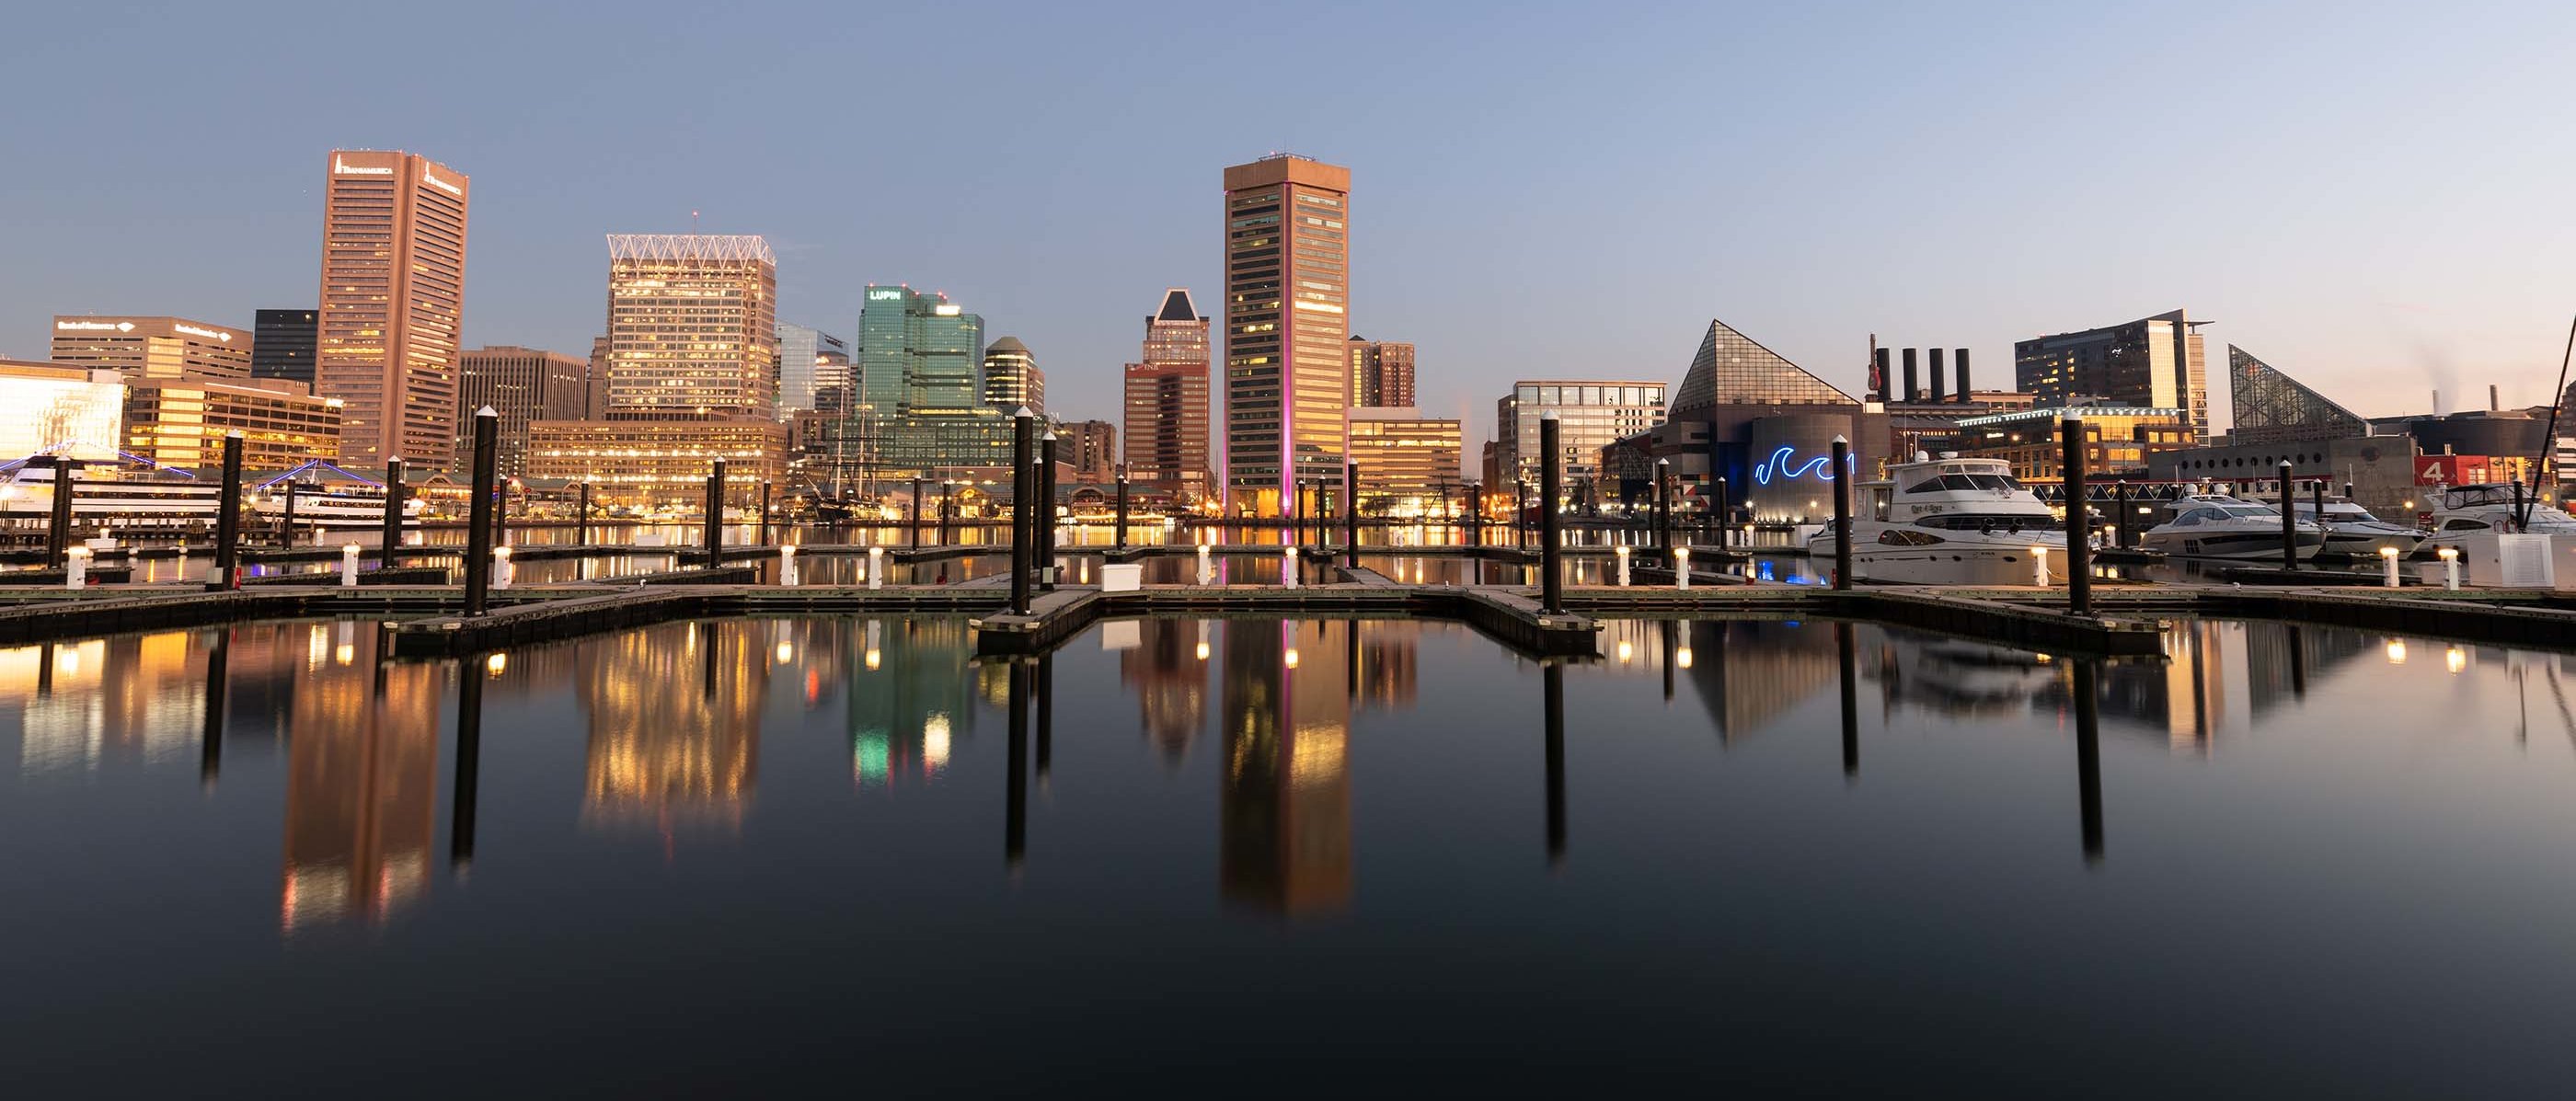 Baltimore Skyline by Patrick Gillespie